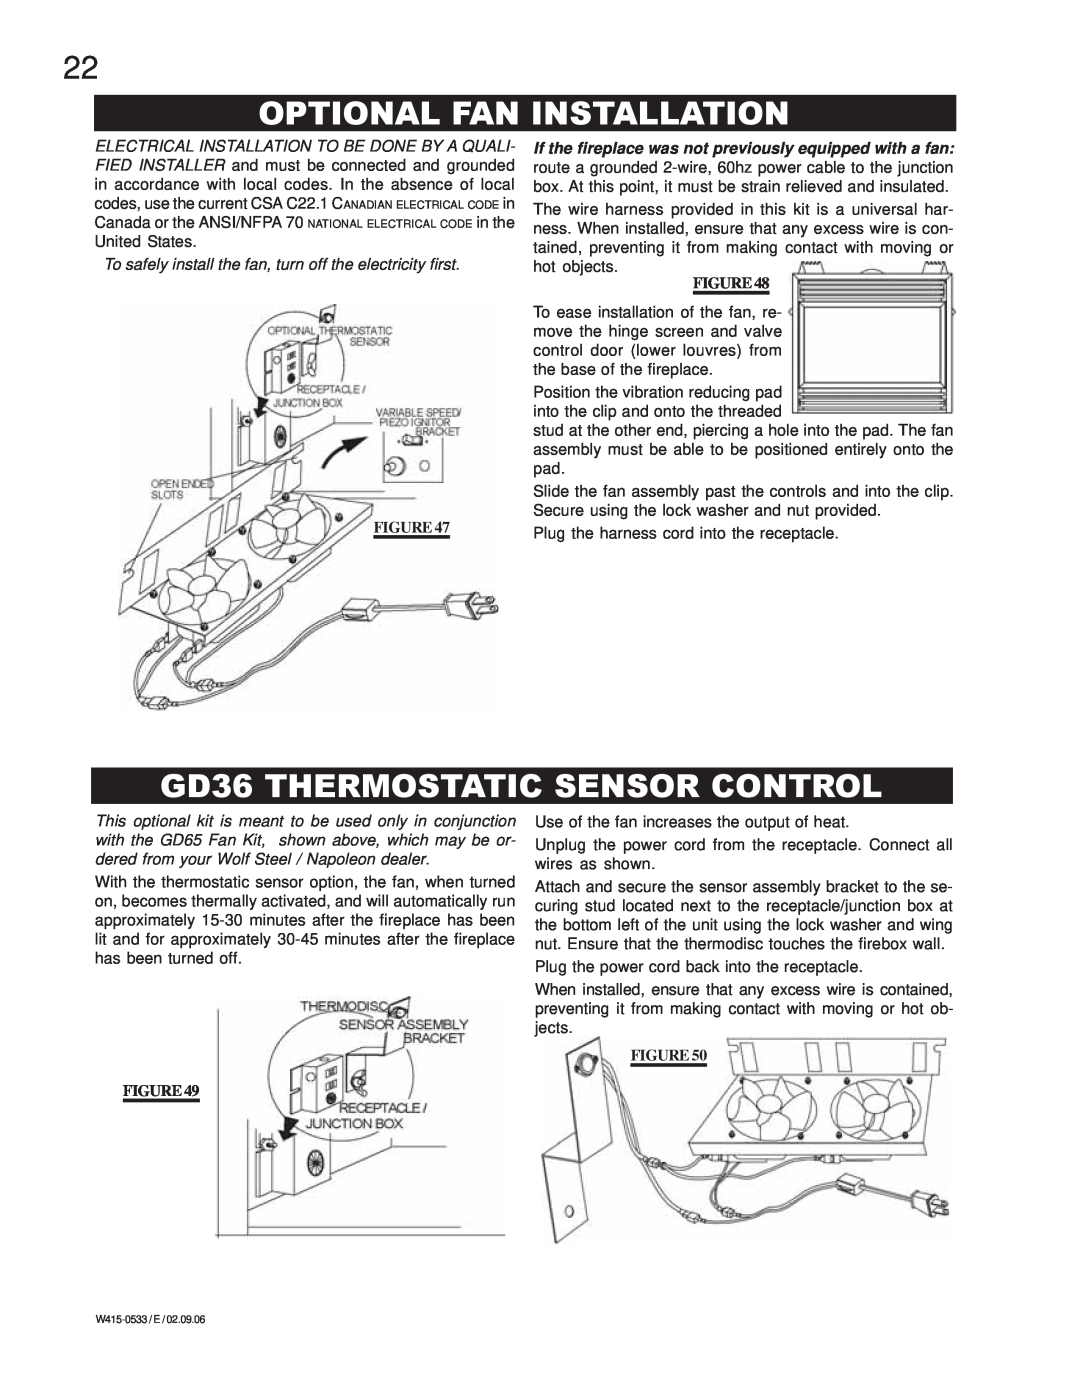 Napoleon Fireplaces BGD42N, BGD42P manual Optional Fan Installation, GD36 THERMOSTATIC SENSOR CONTROL 